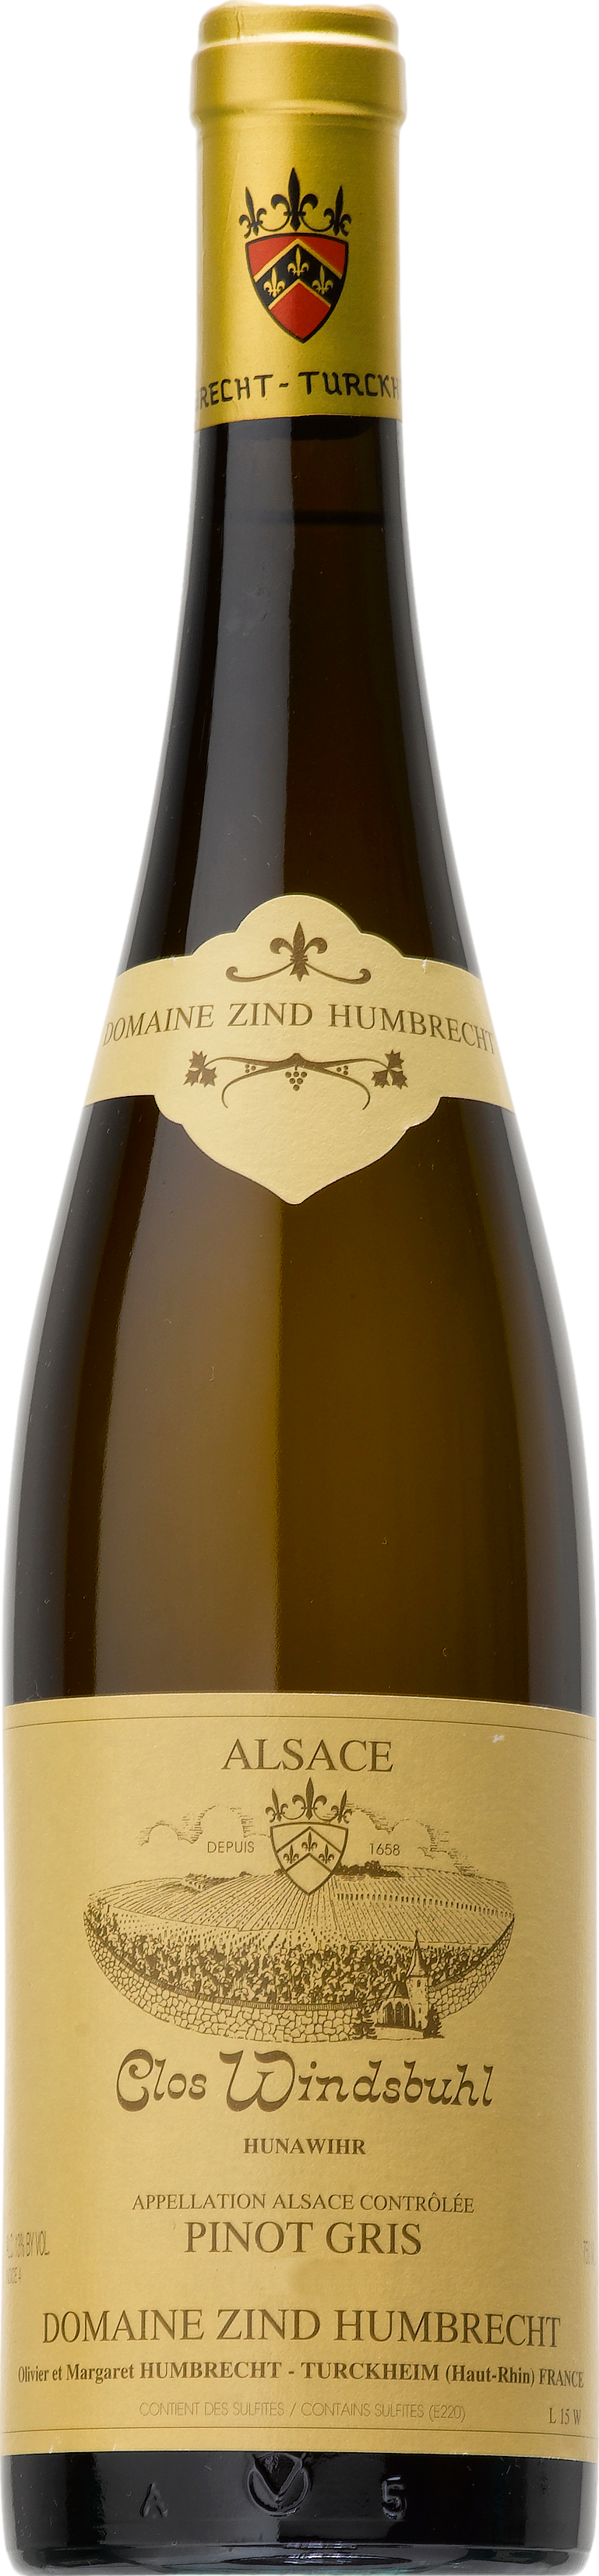 9001:2015 günstig Kaufen-Domaine Zind-Humbrecht Pinot Gris Clos Windsbuhl 2015. Domaine Zind-Humbrecht Pinot Gris Clos Windsbuhl 2015 . 